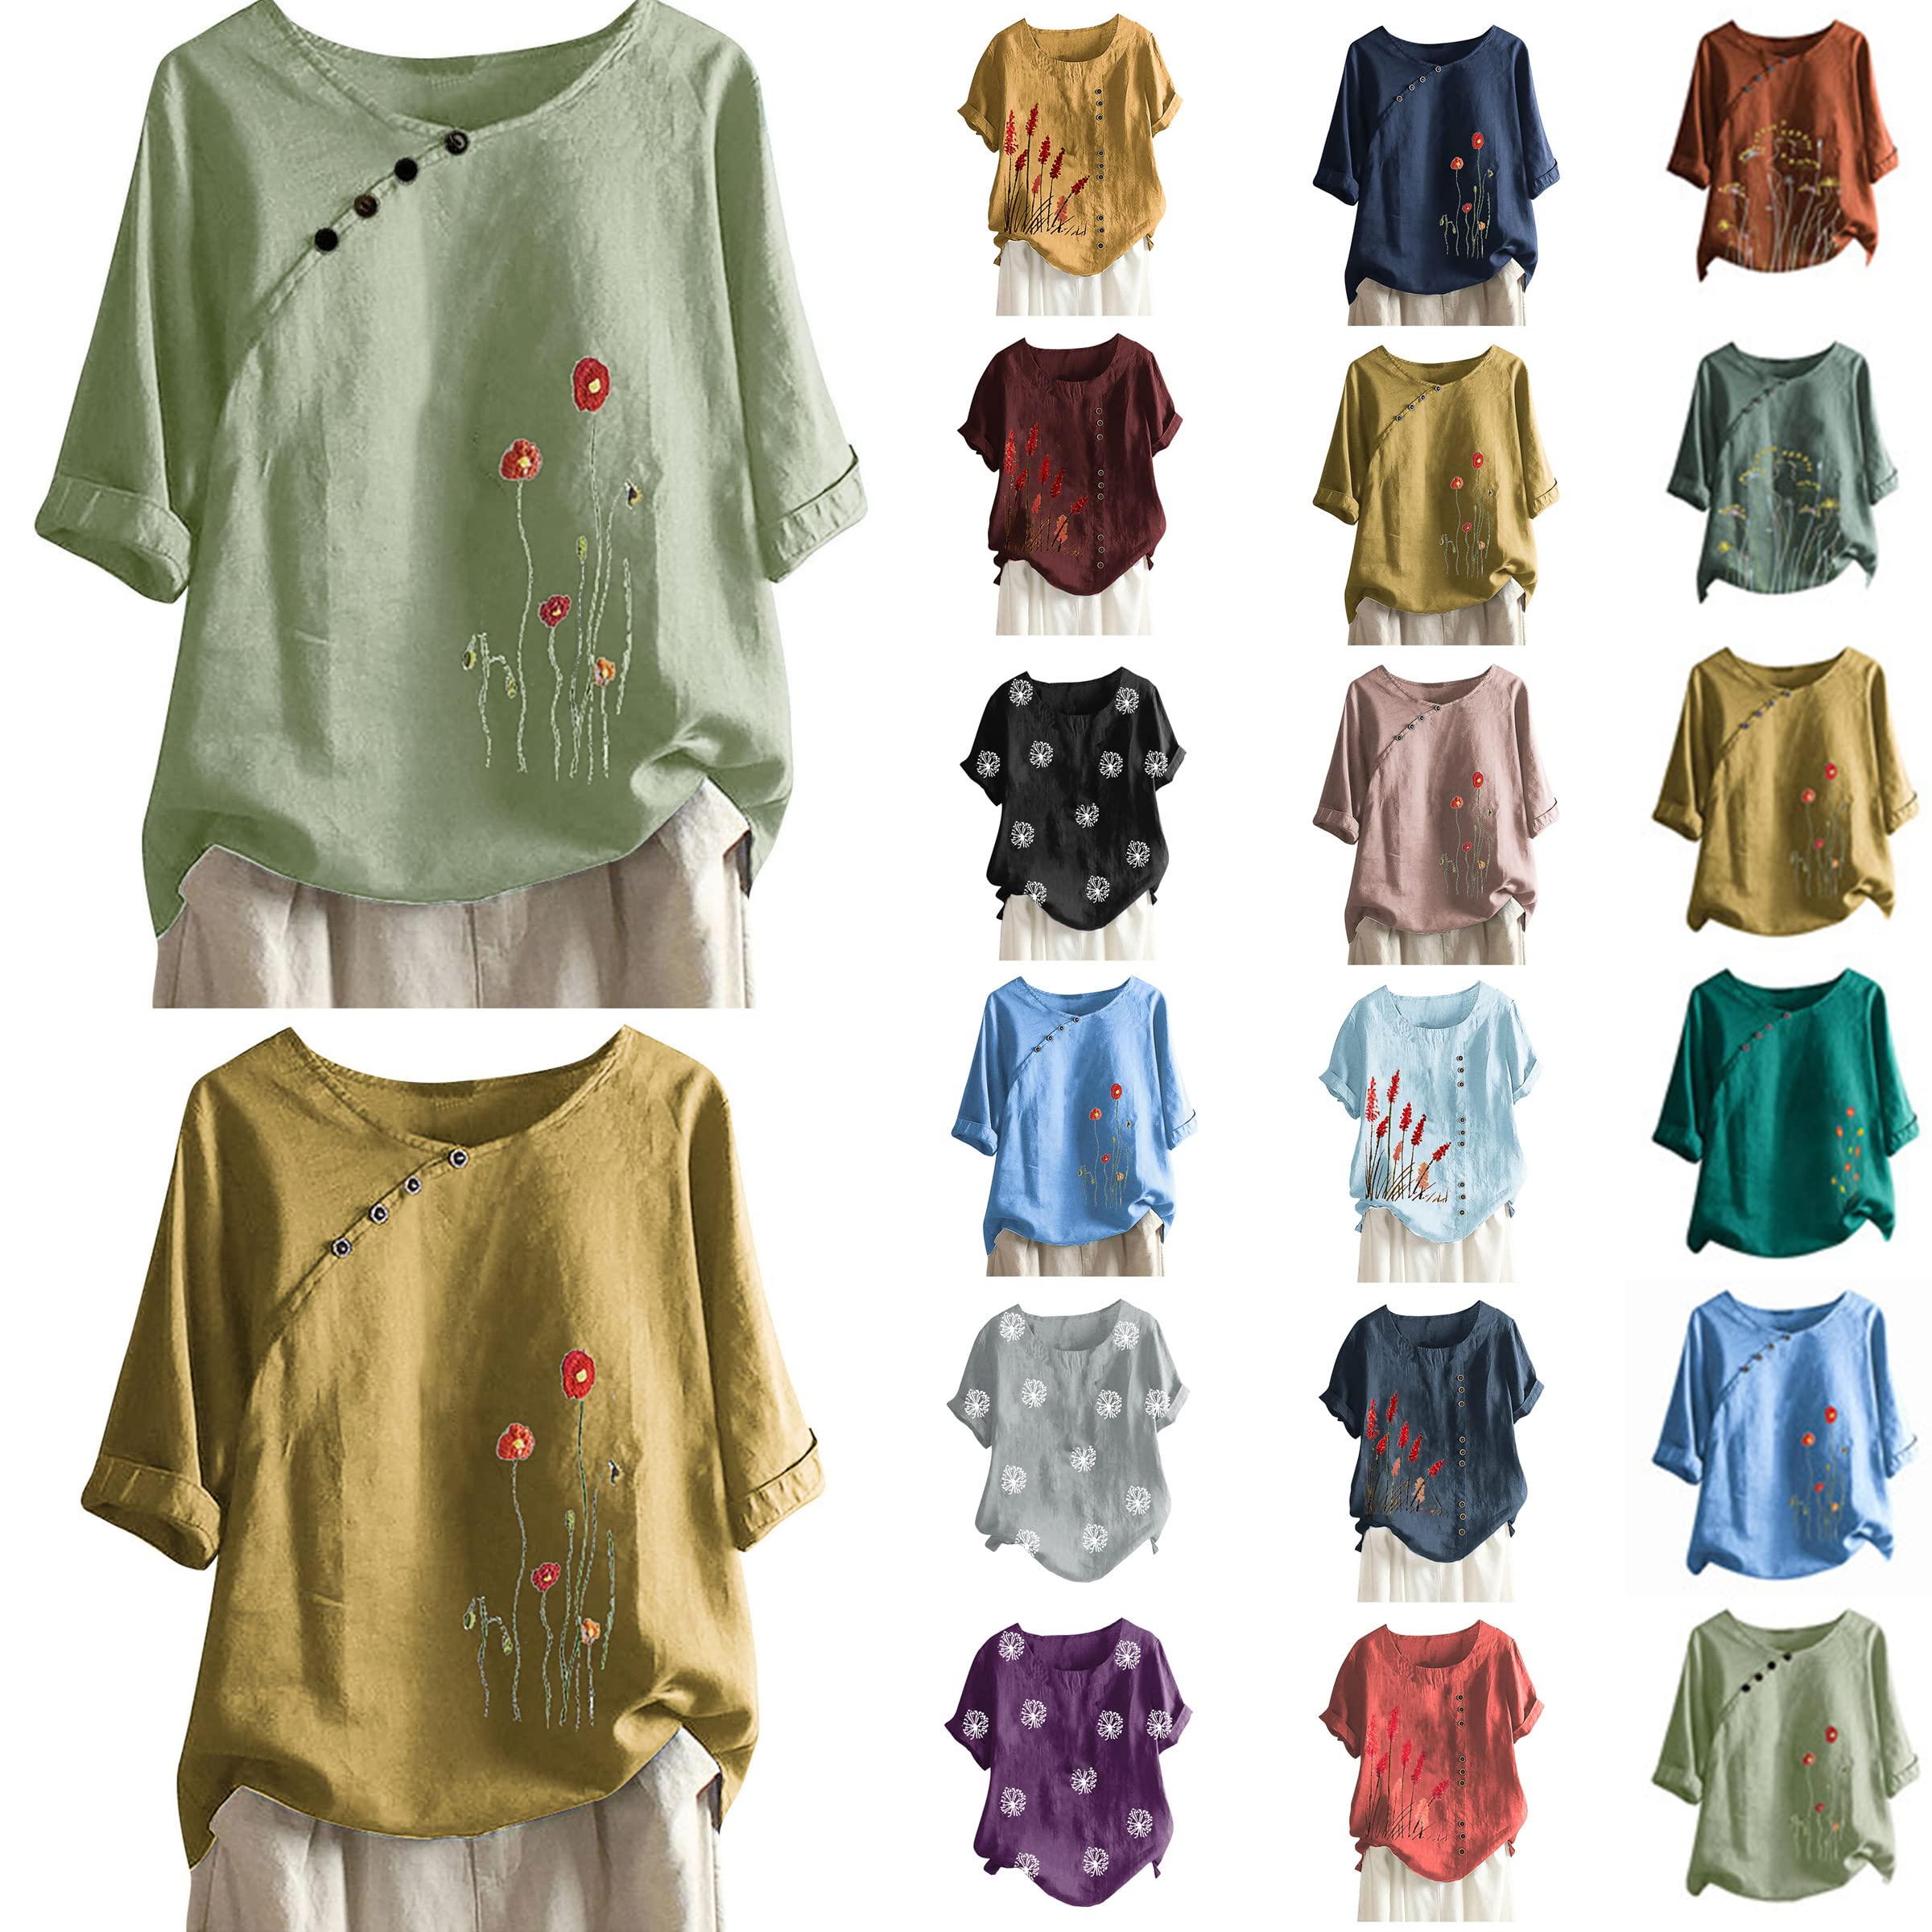 Iuhan Plus Size Tops for Women Dressy Casual Summer Linen Tops for Women  Crewneck Short Sleeve Floral Cotton Linen Shirt A2# Mint Green Cotton Tops  for Women 3X-Large